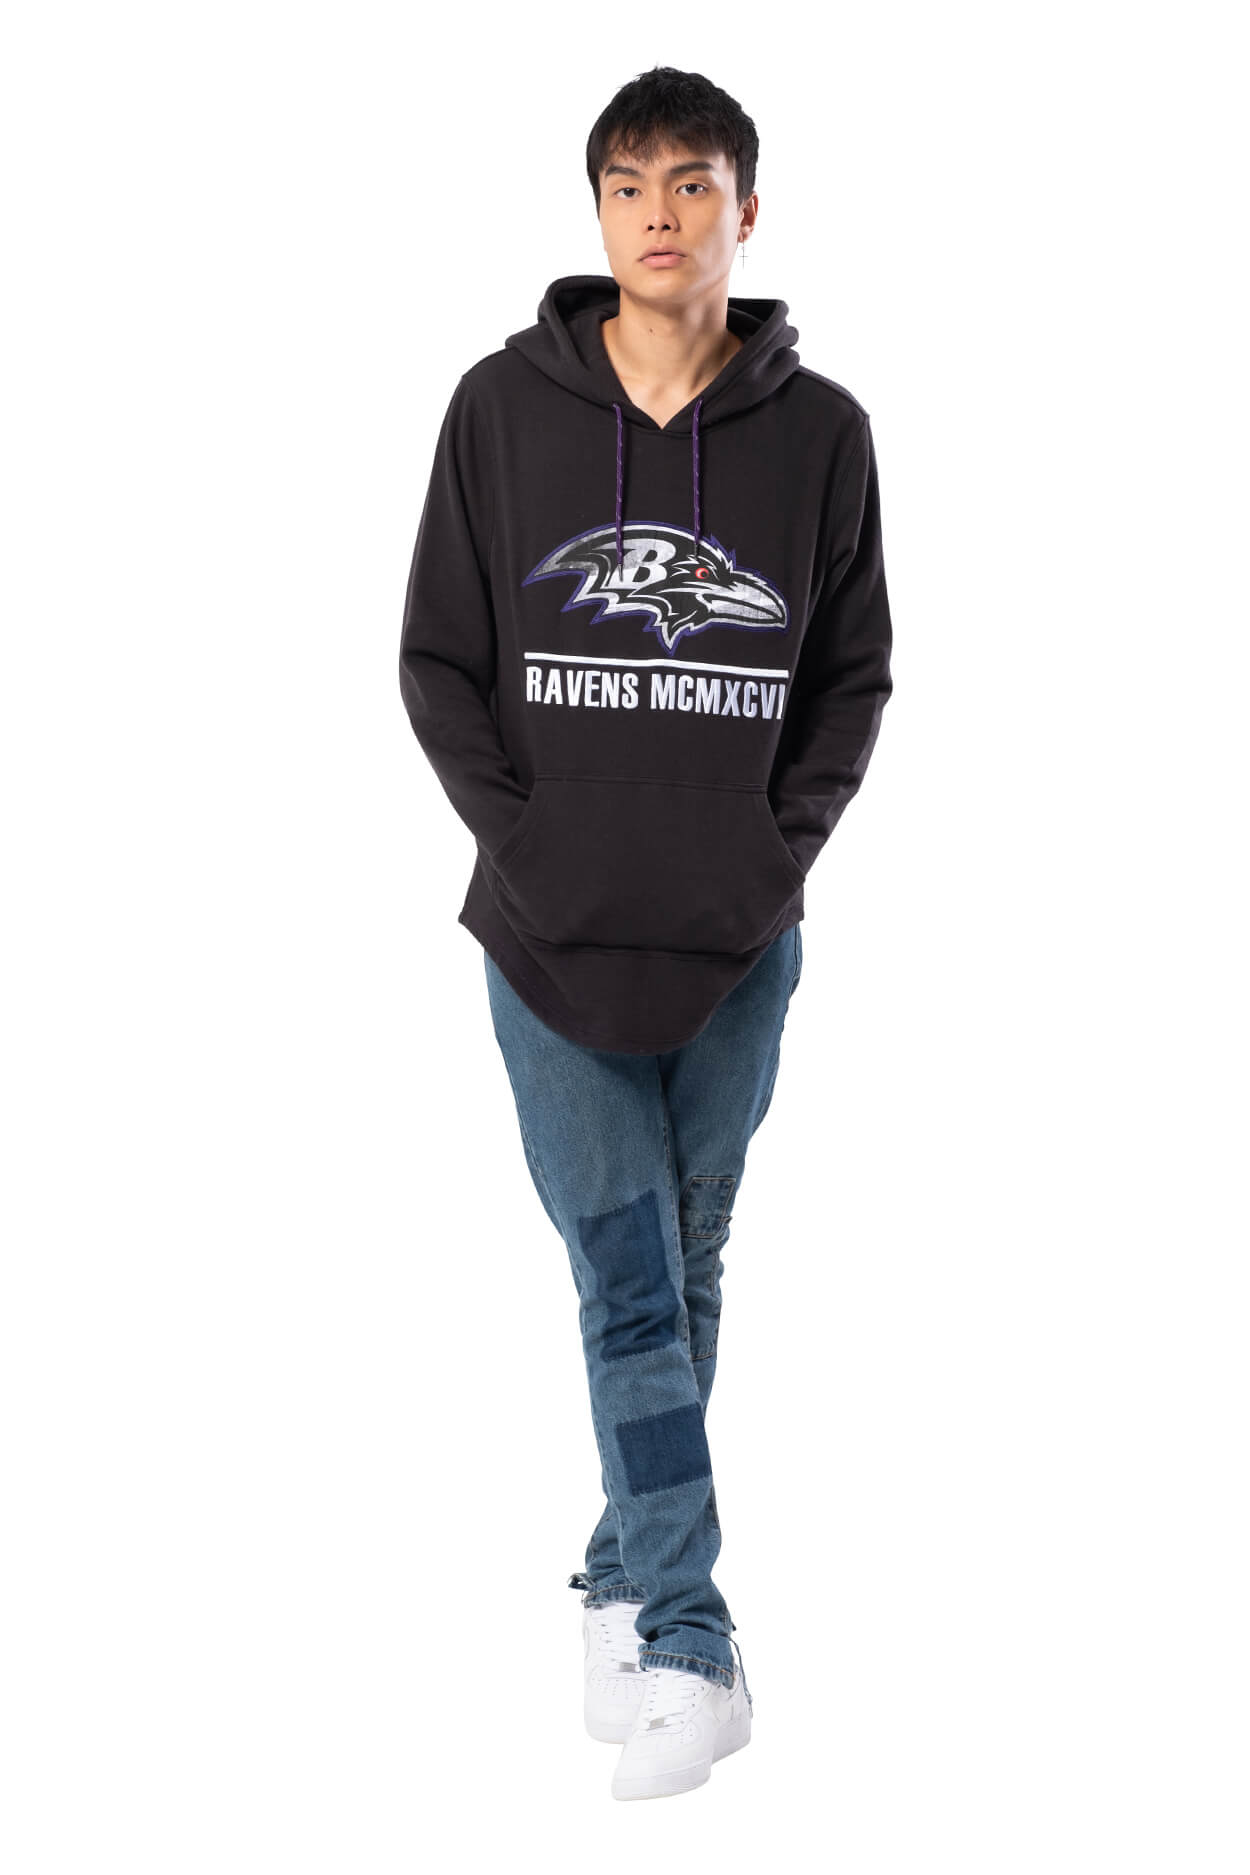 NFL Baltimore Ravens Men's Embroidered Hoodie|Baltimore Ravens